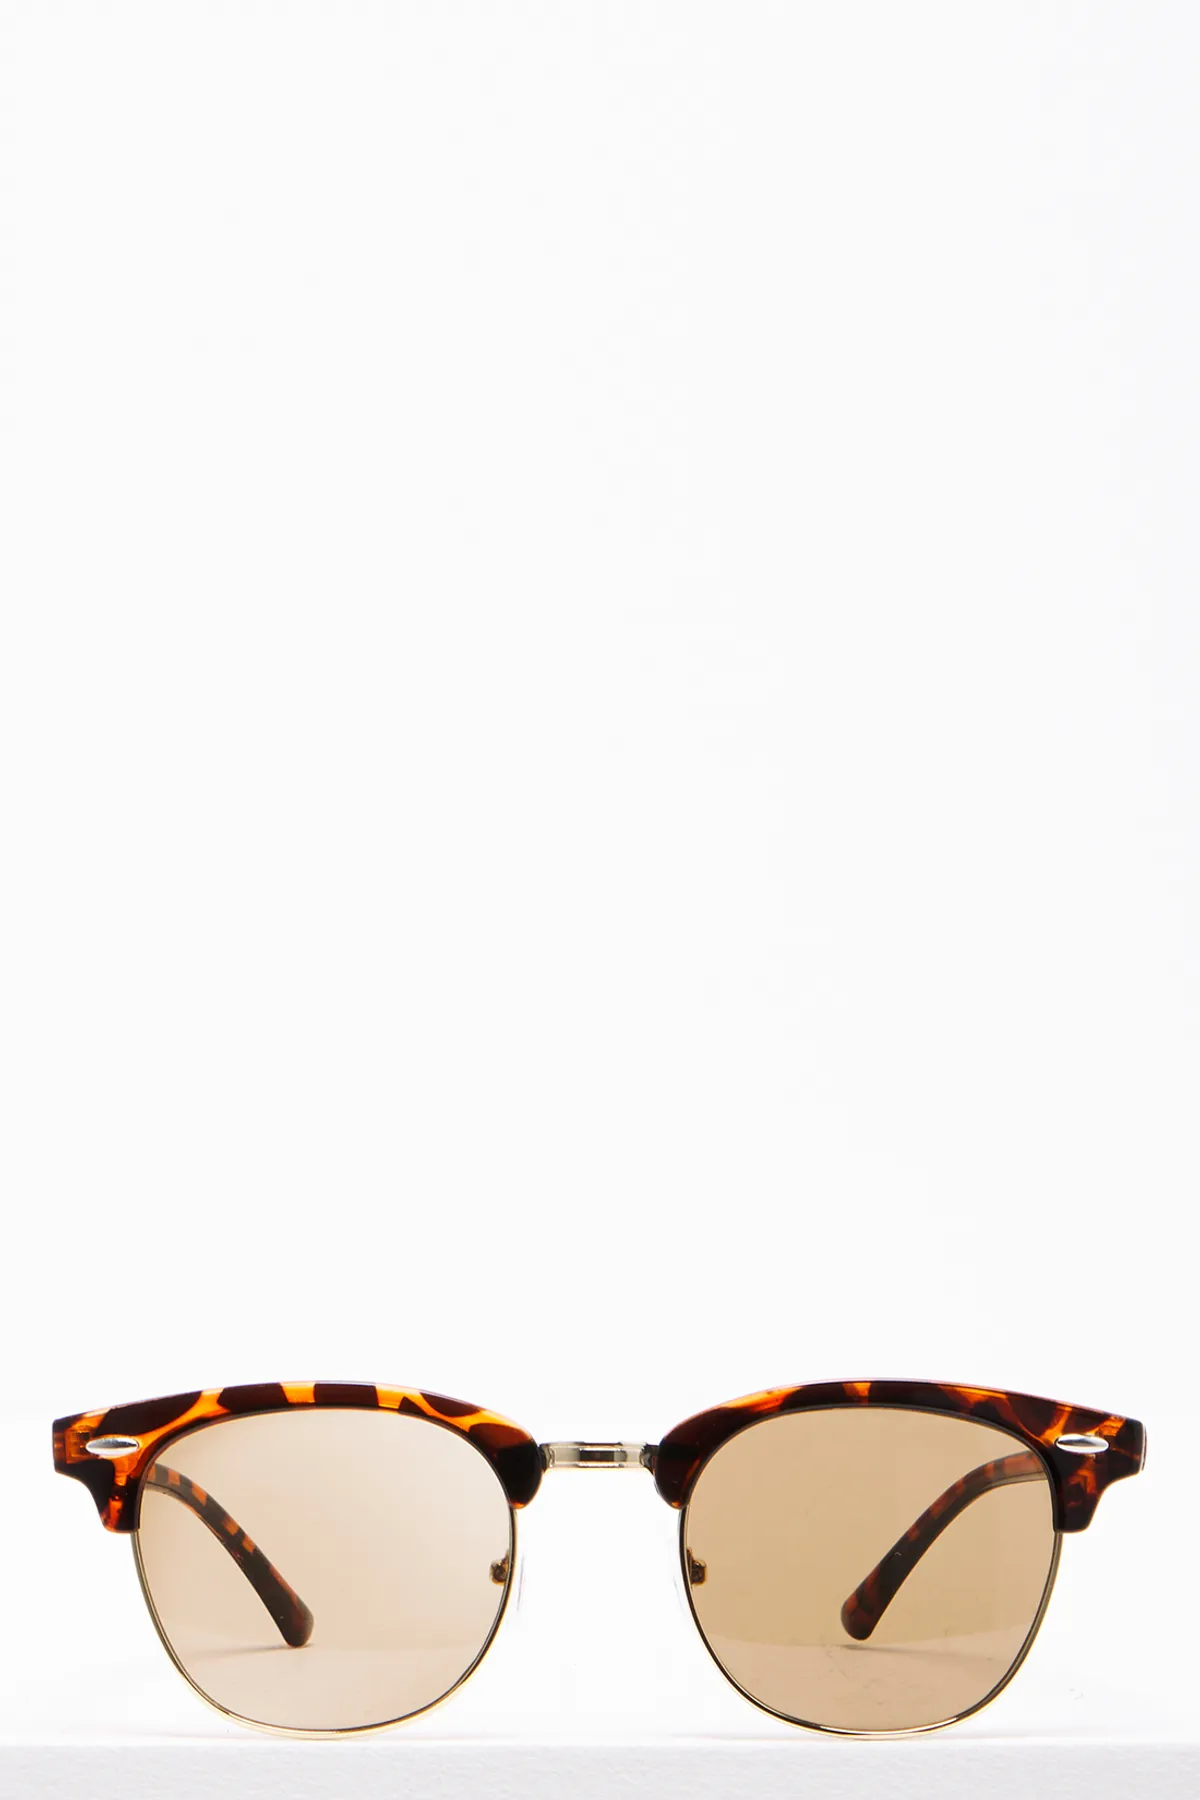 Tortoise shell sunglasses brown - TEEN BOYS Sunglasses 